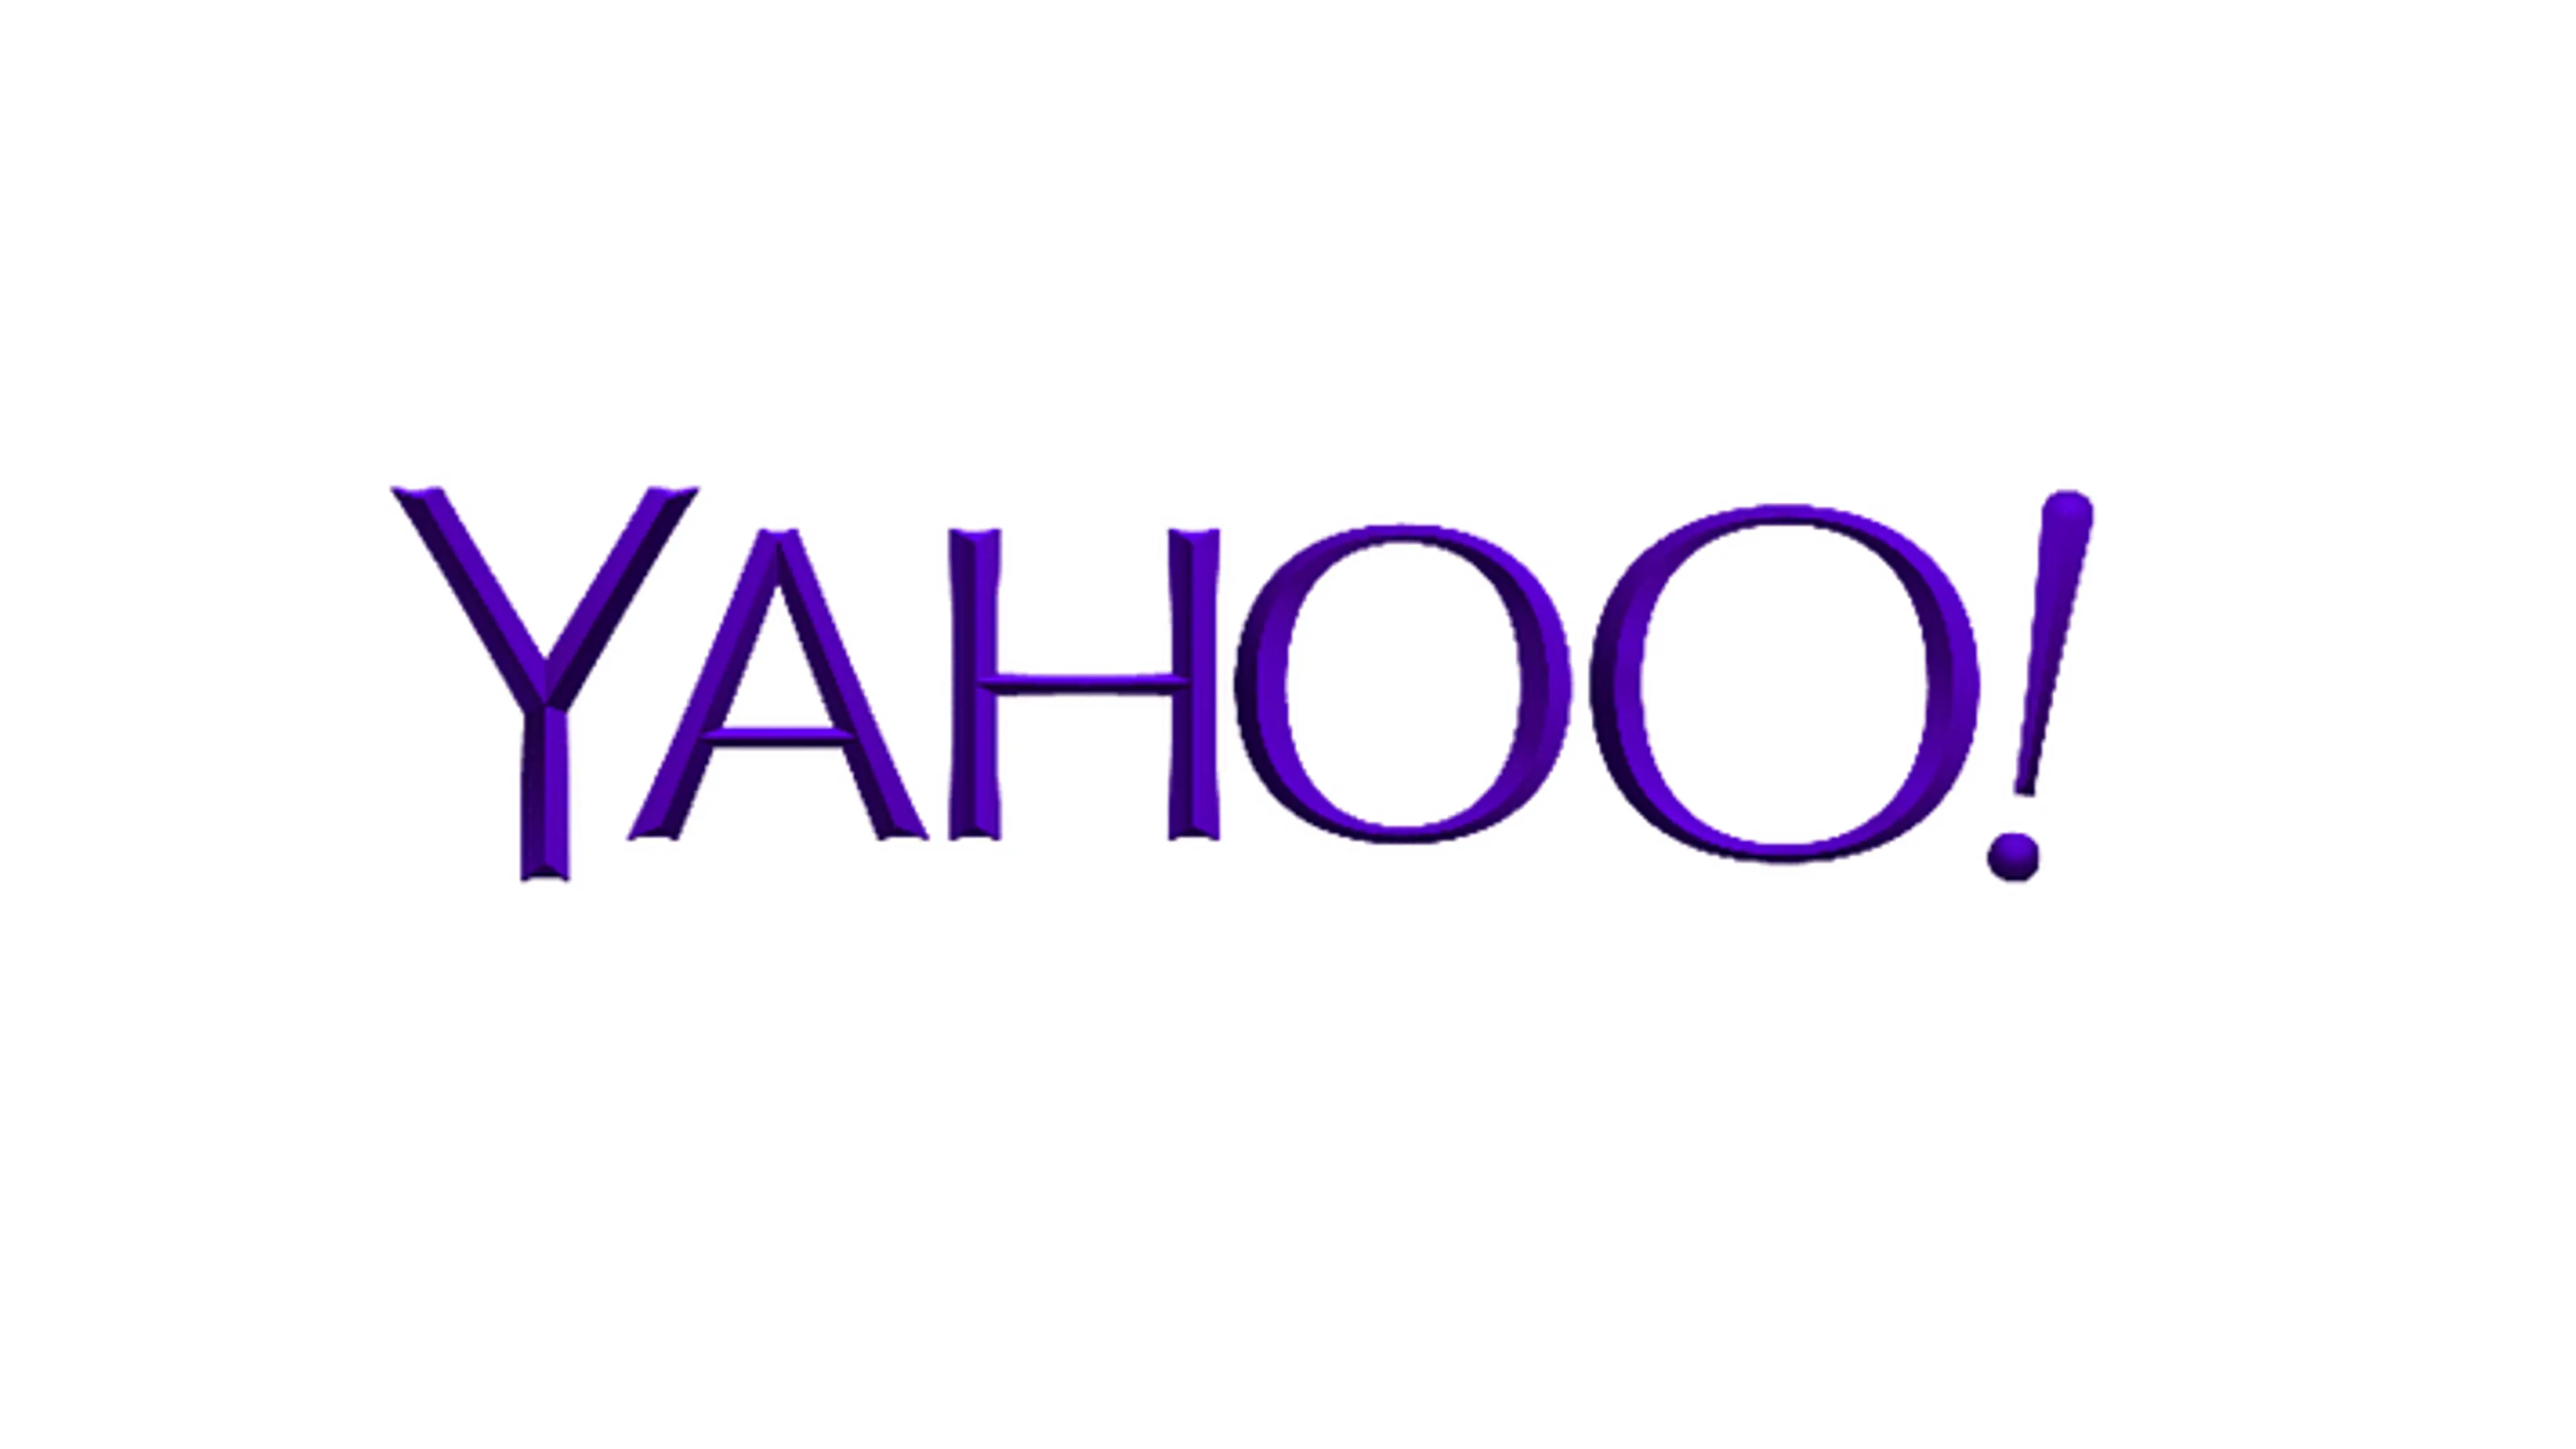 Yahoo's Billion-Dollar Blunders with Google, Facebook, Microsoft and Netflix